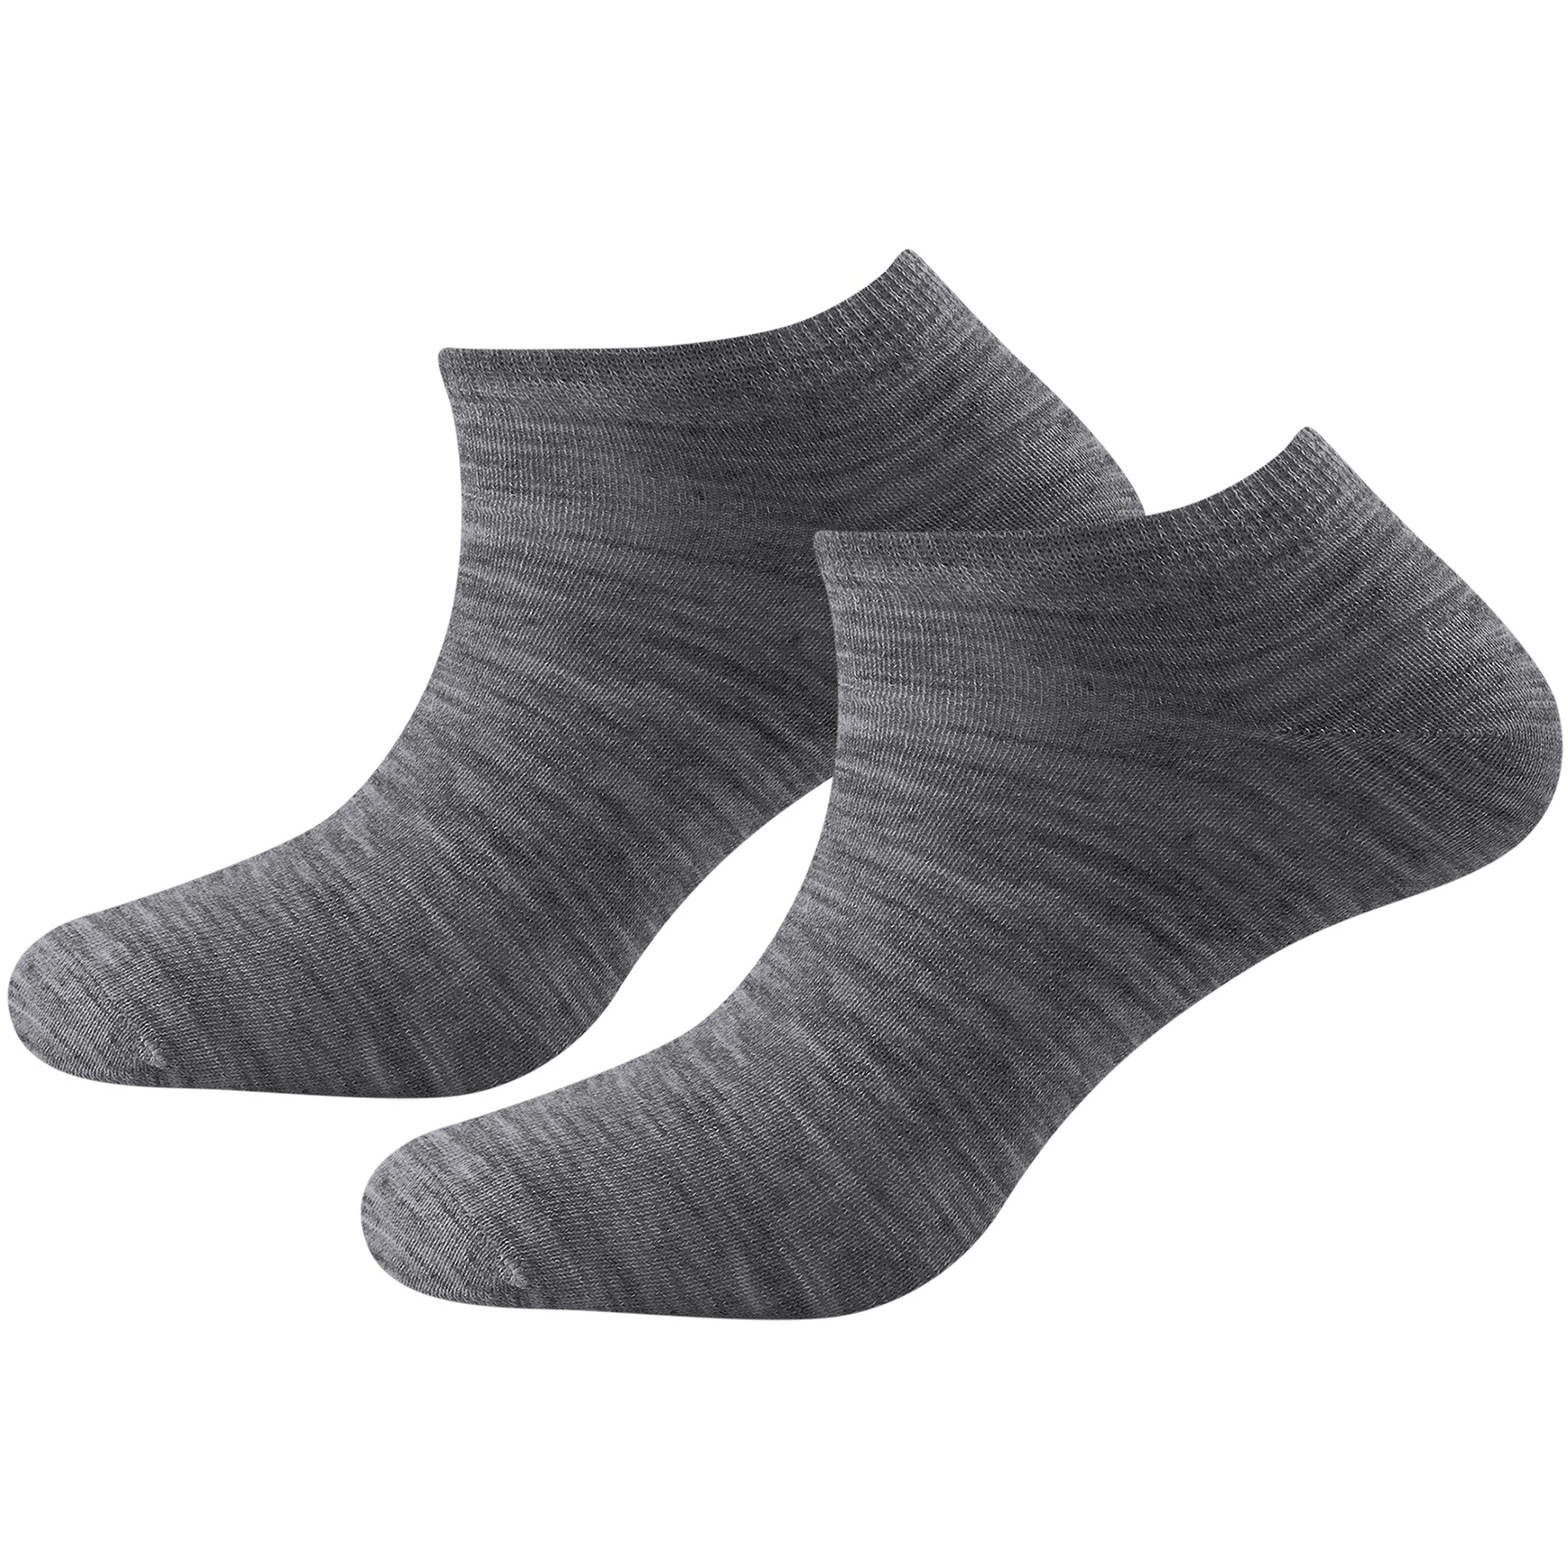 Picture of Devold Daily Shorty Merino Socks (2 Pack) - 770 Grey Melange